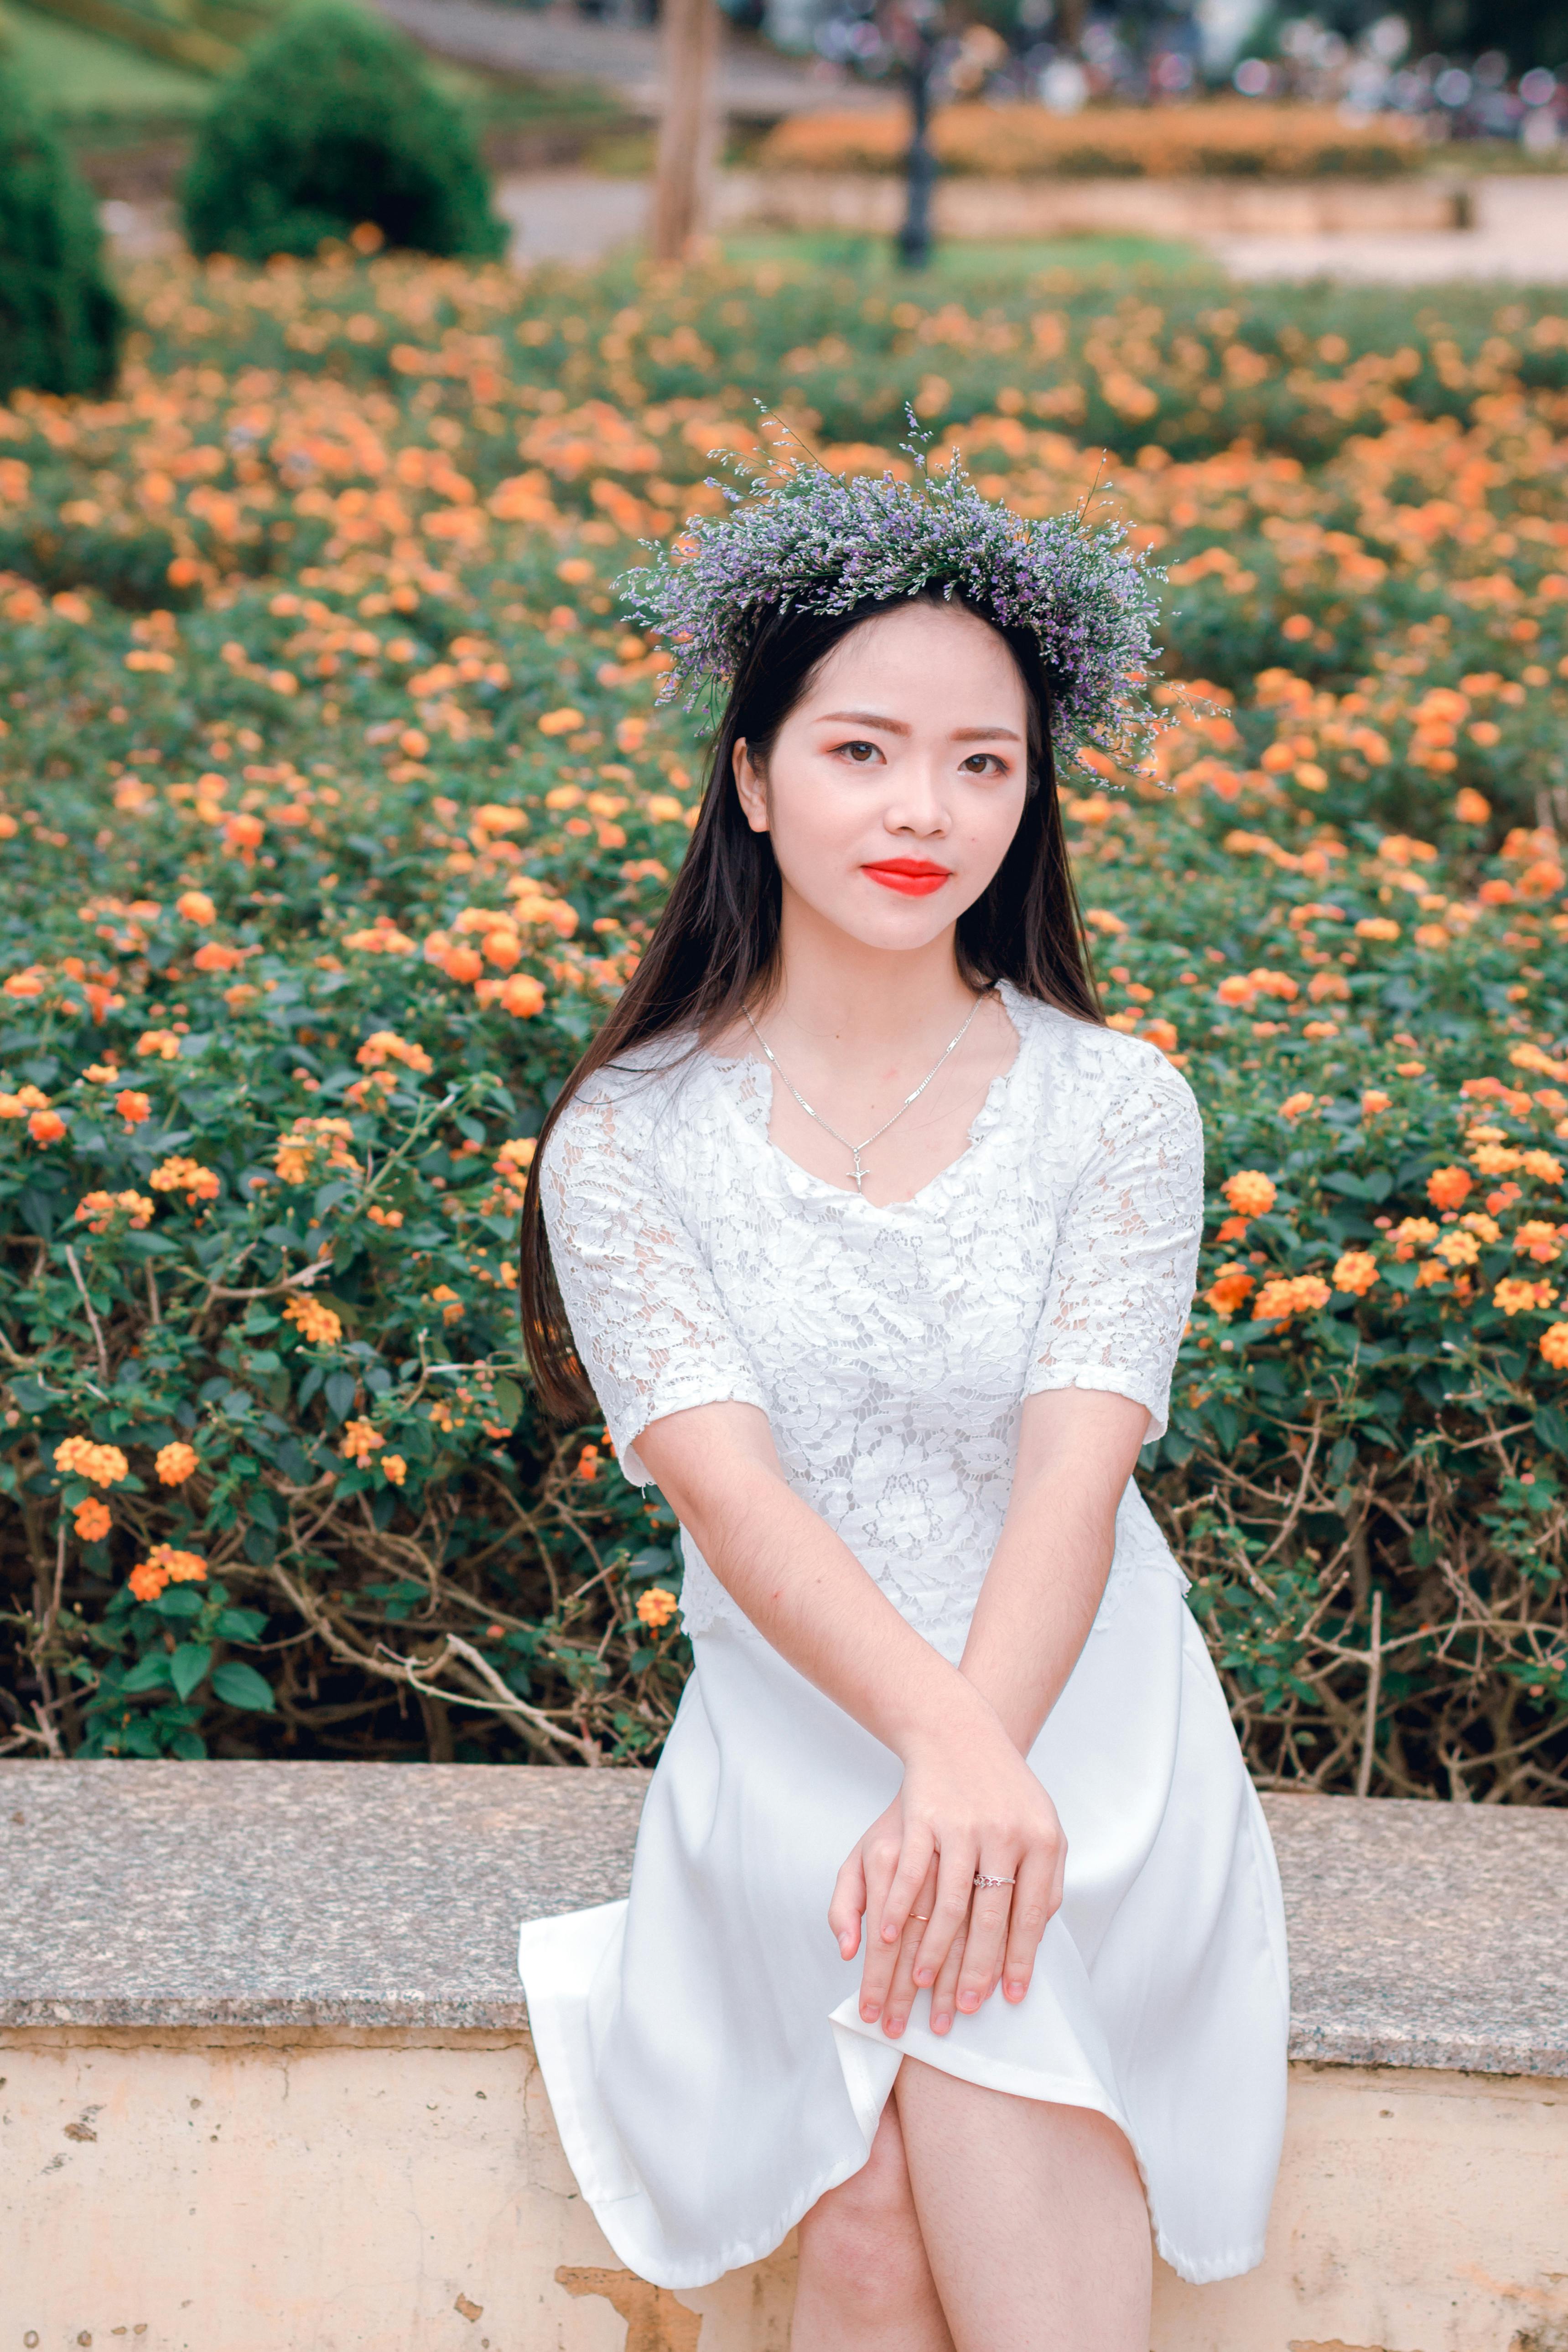 https://cupidbrides.com/vietnamese-brides/